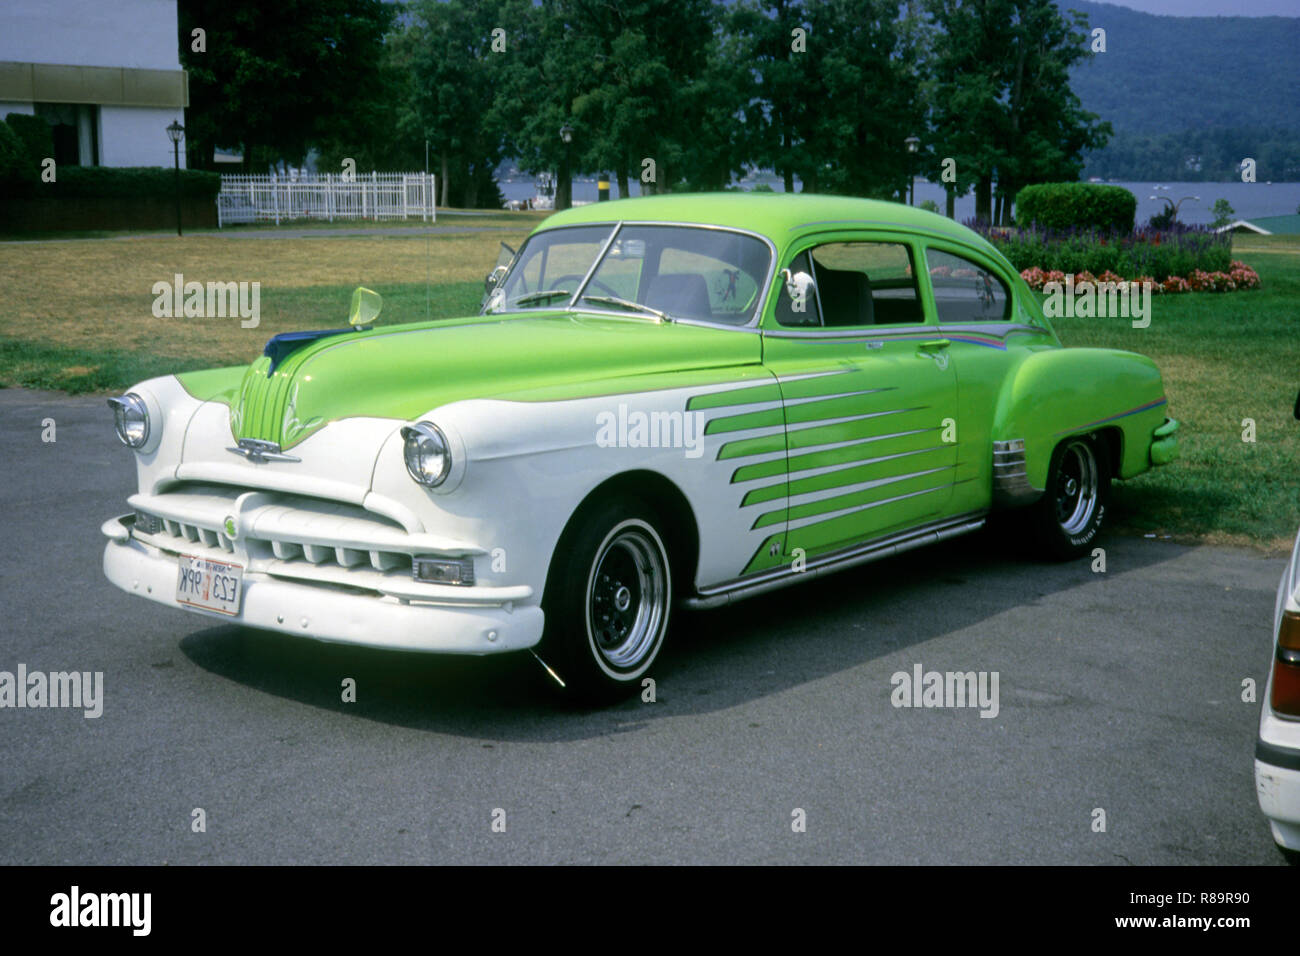 Classic car, old car, antique car, vintage car, 50s, 60s, 70s, Stock Photo